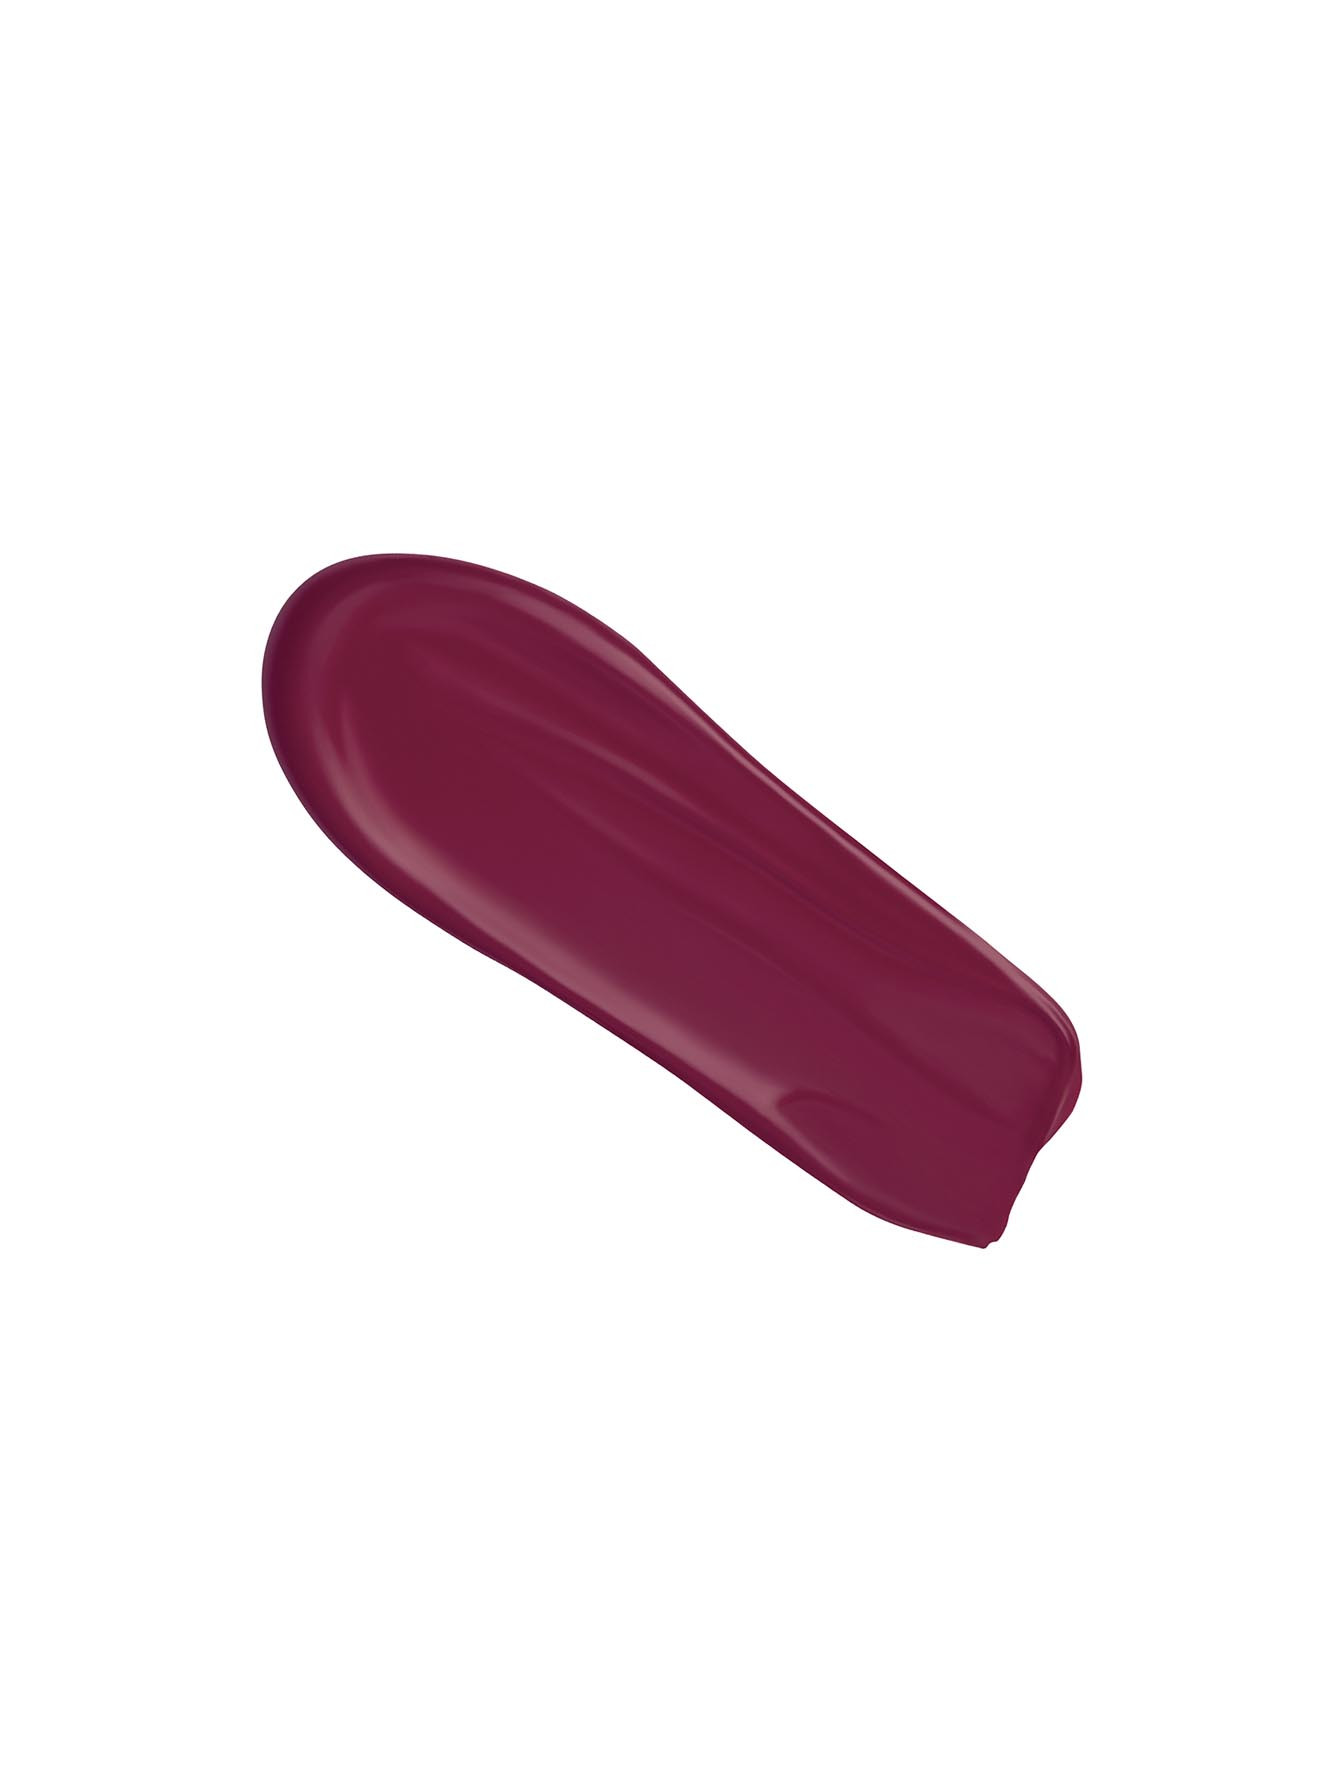 Матовая губная помада Lip-Expert Matte Liquid Lipstick, 6 Chili Fig, 4 мл - Обтравка1